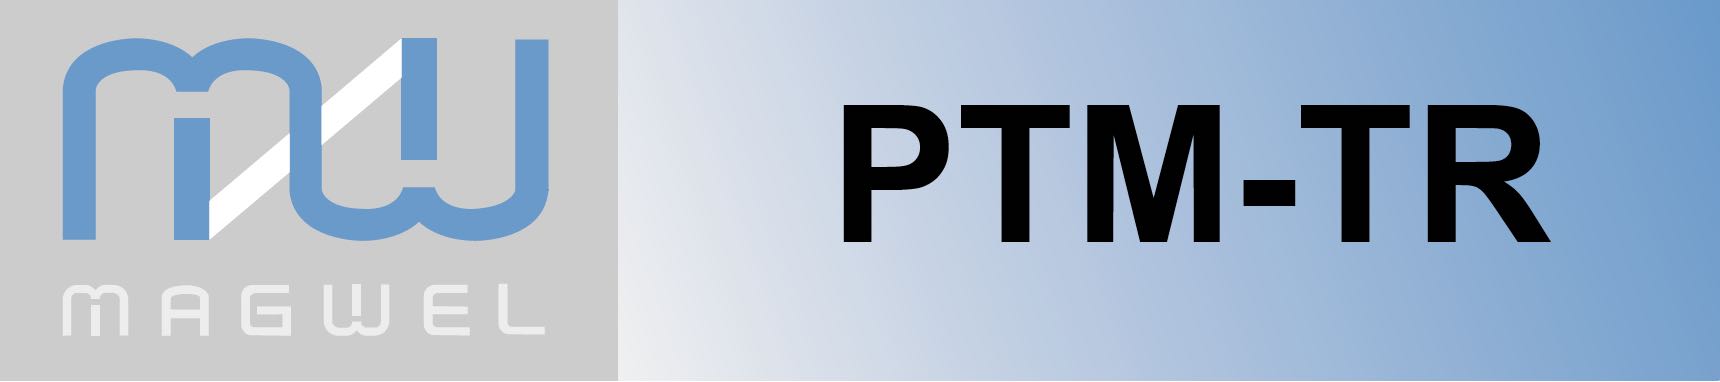 PTM TR header